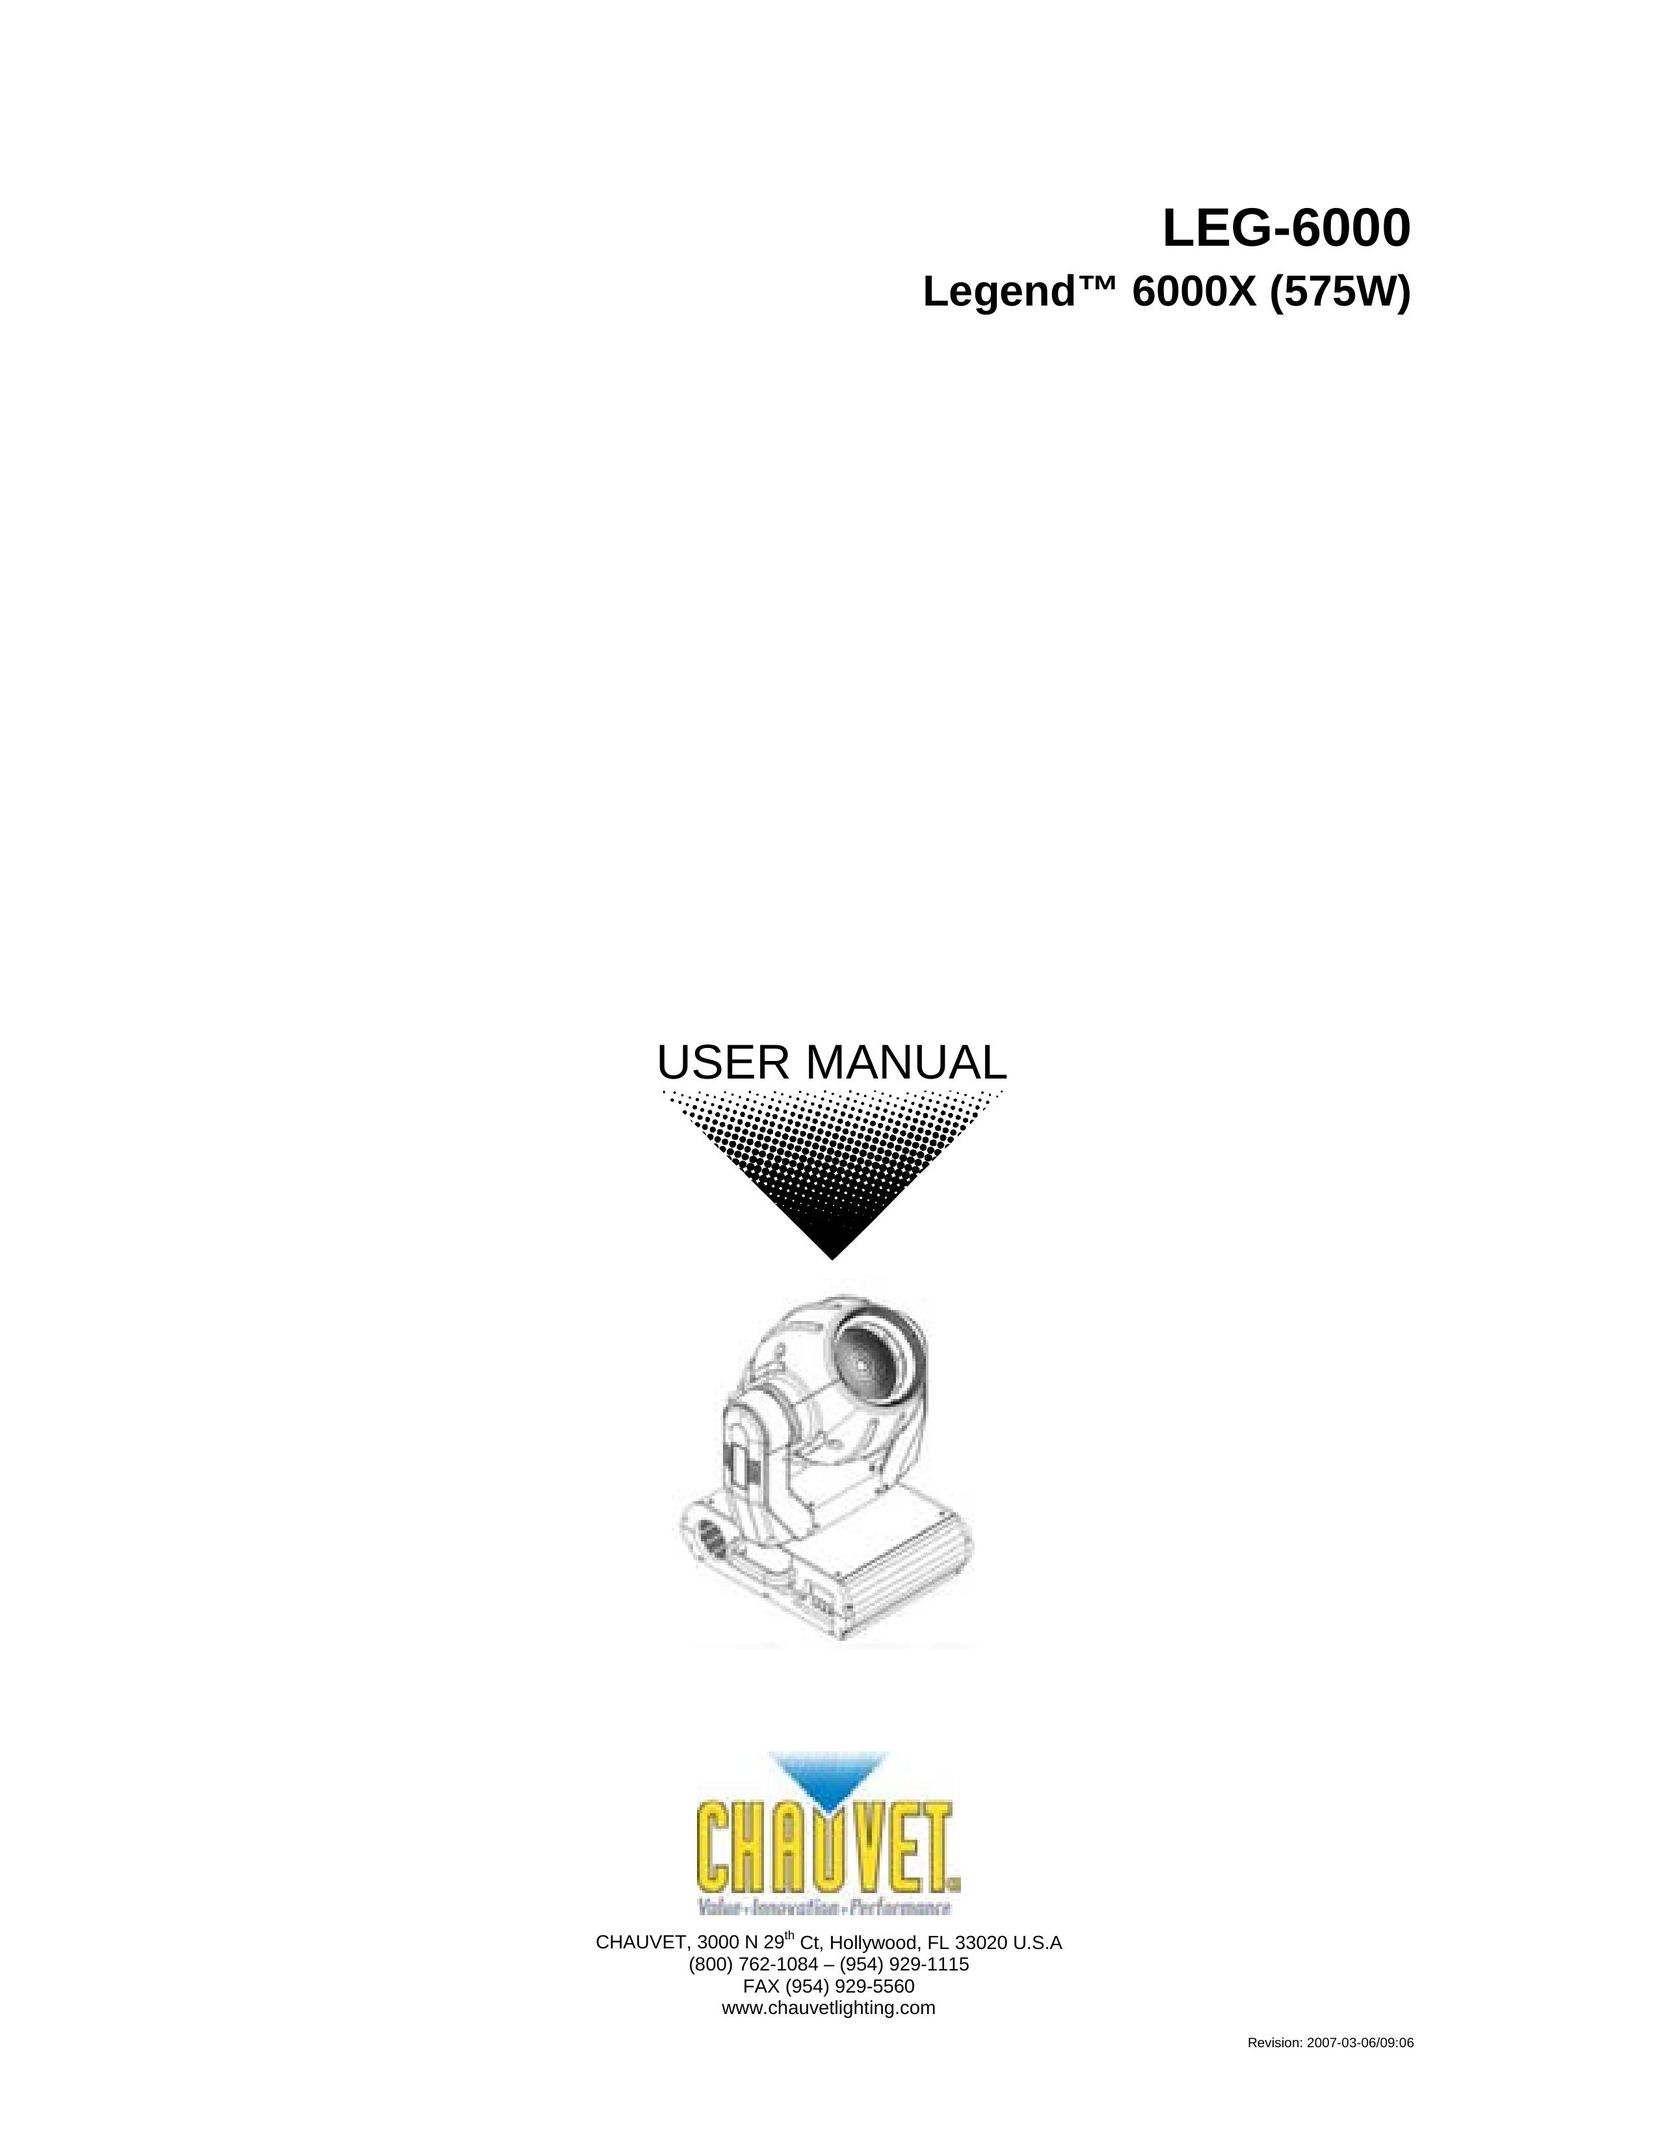 Chauvet LEG-6000 Indoor Furnishings User Manual